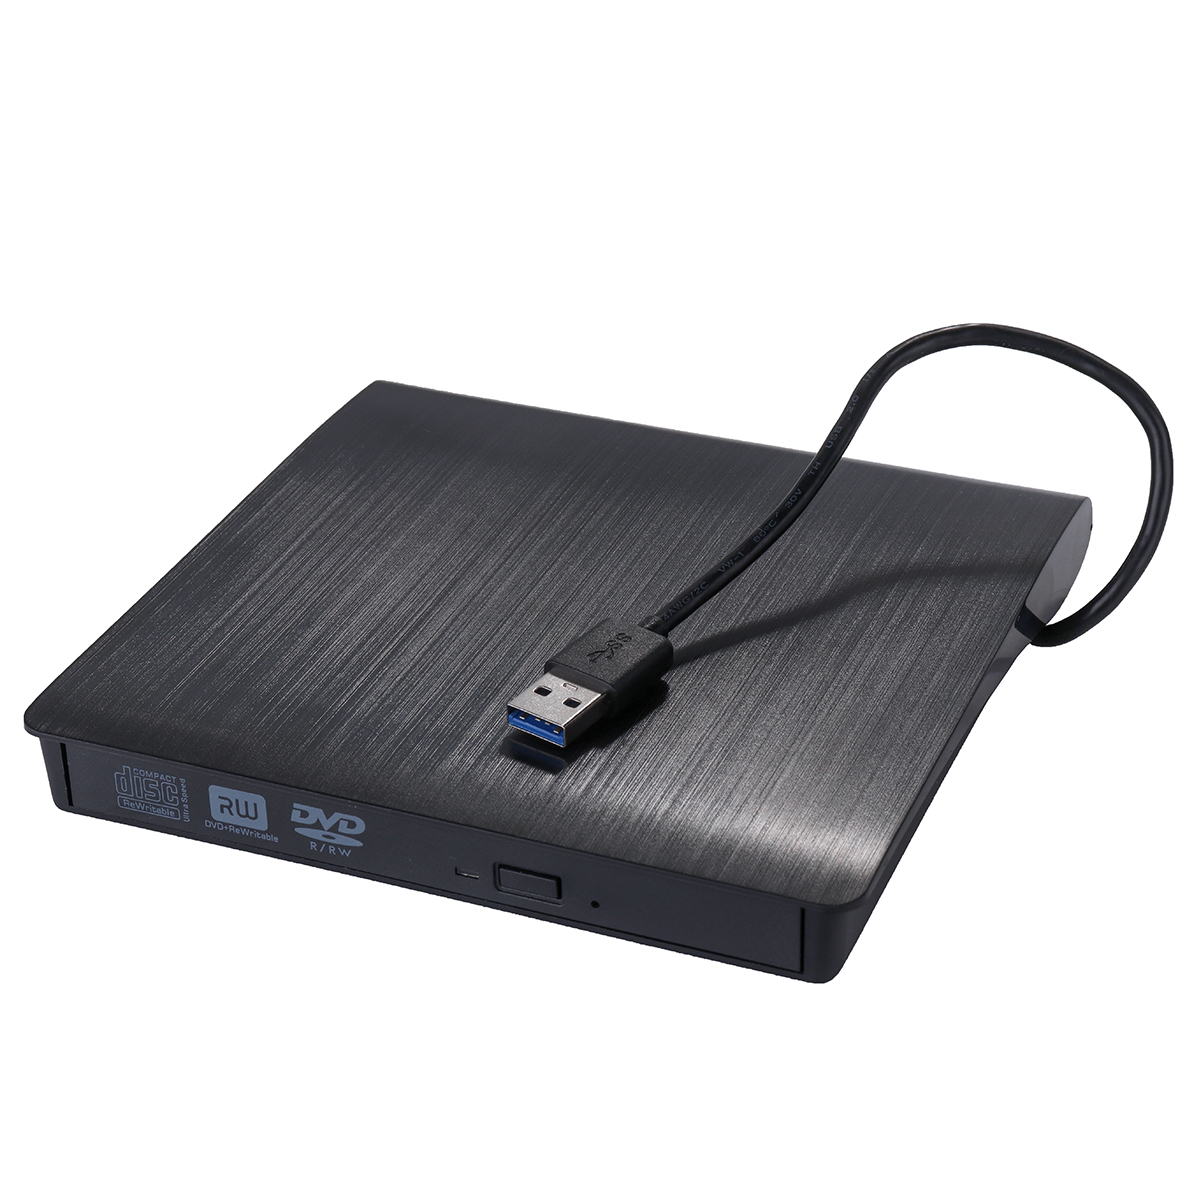 Mechzone-USB30-External-Optical-Drive-Slim-USB-CD-DVD-Burner-DVD-RW-Player-Writer-Support-2MB-Data-T-1772244-8